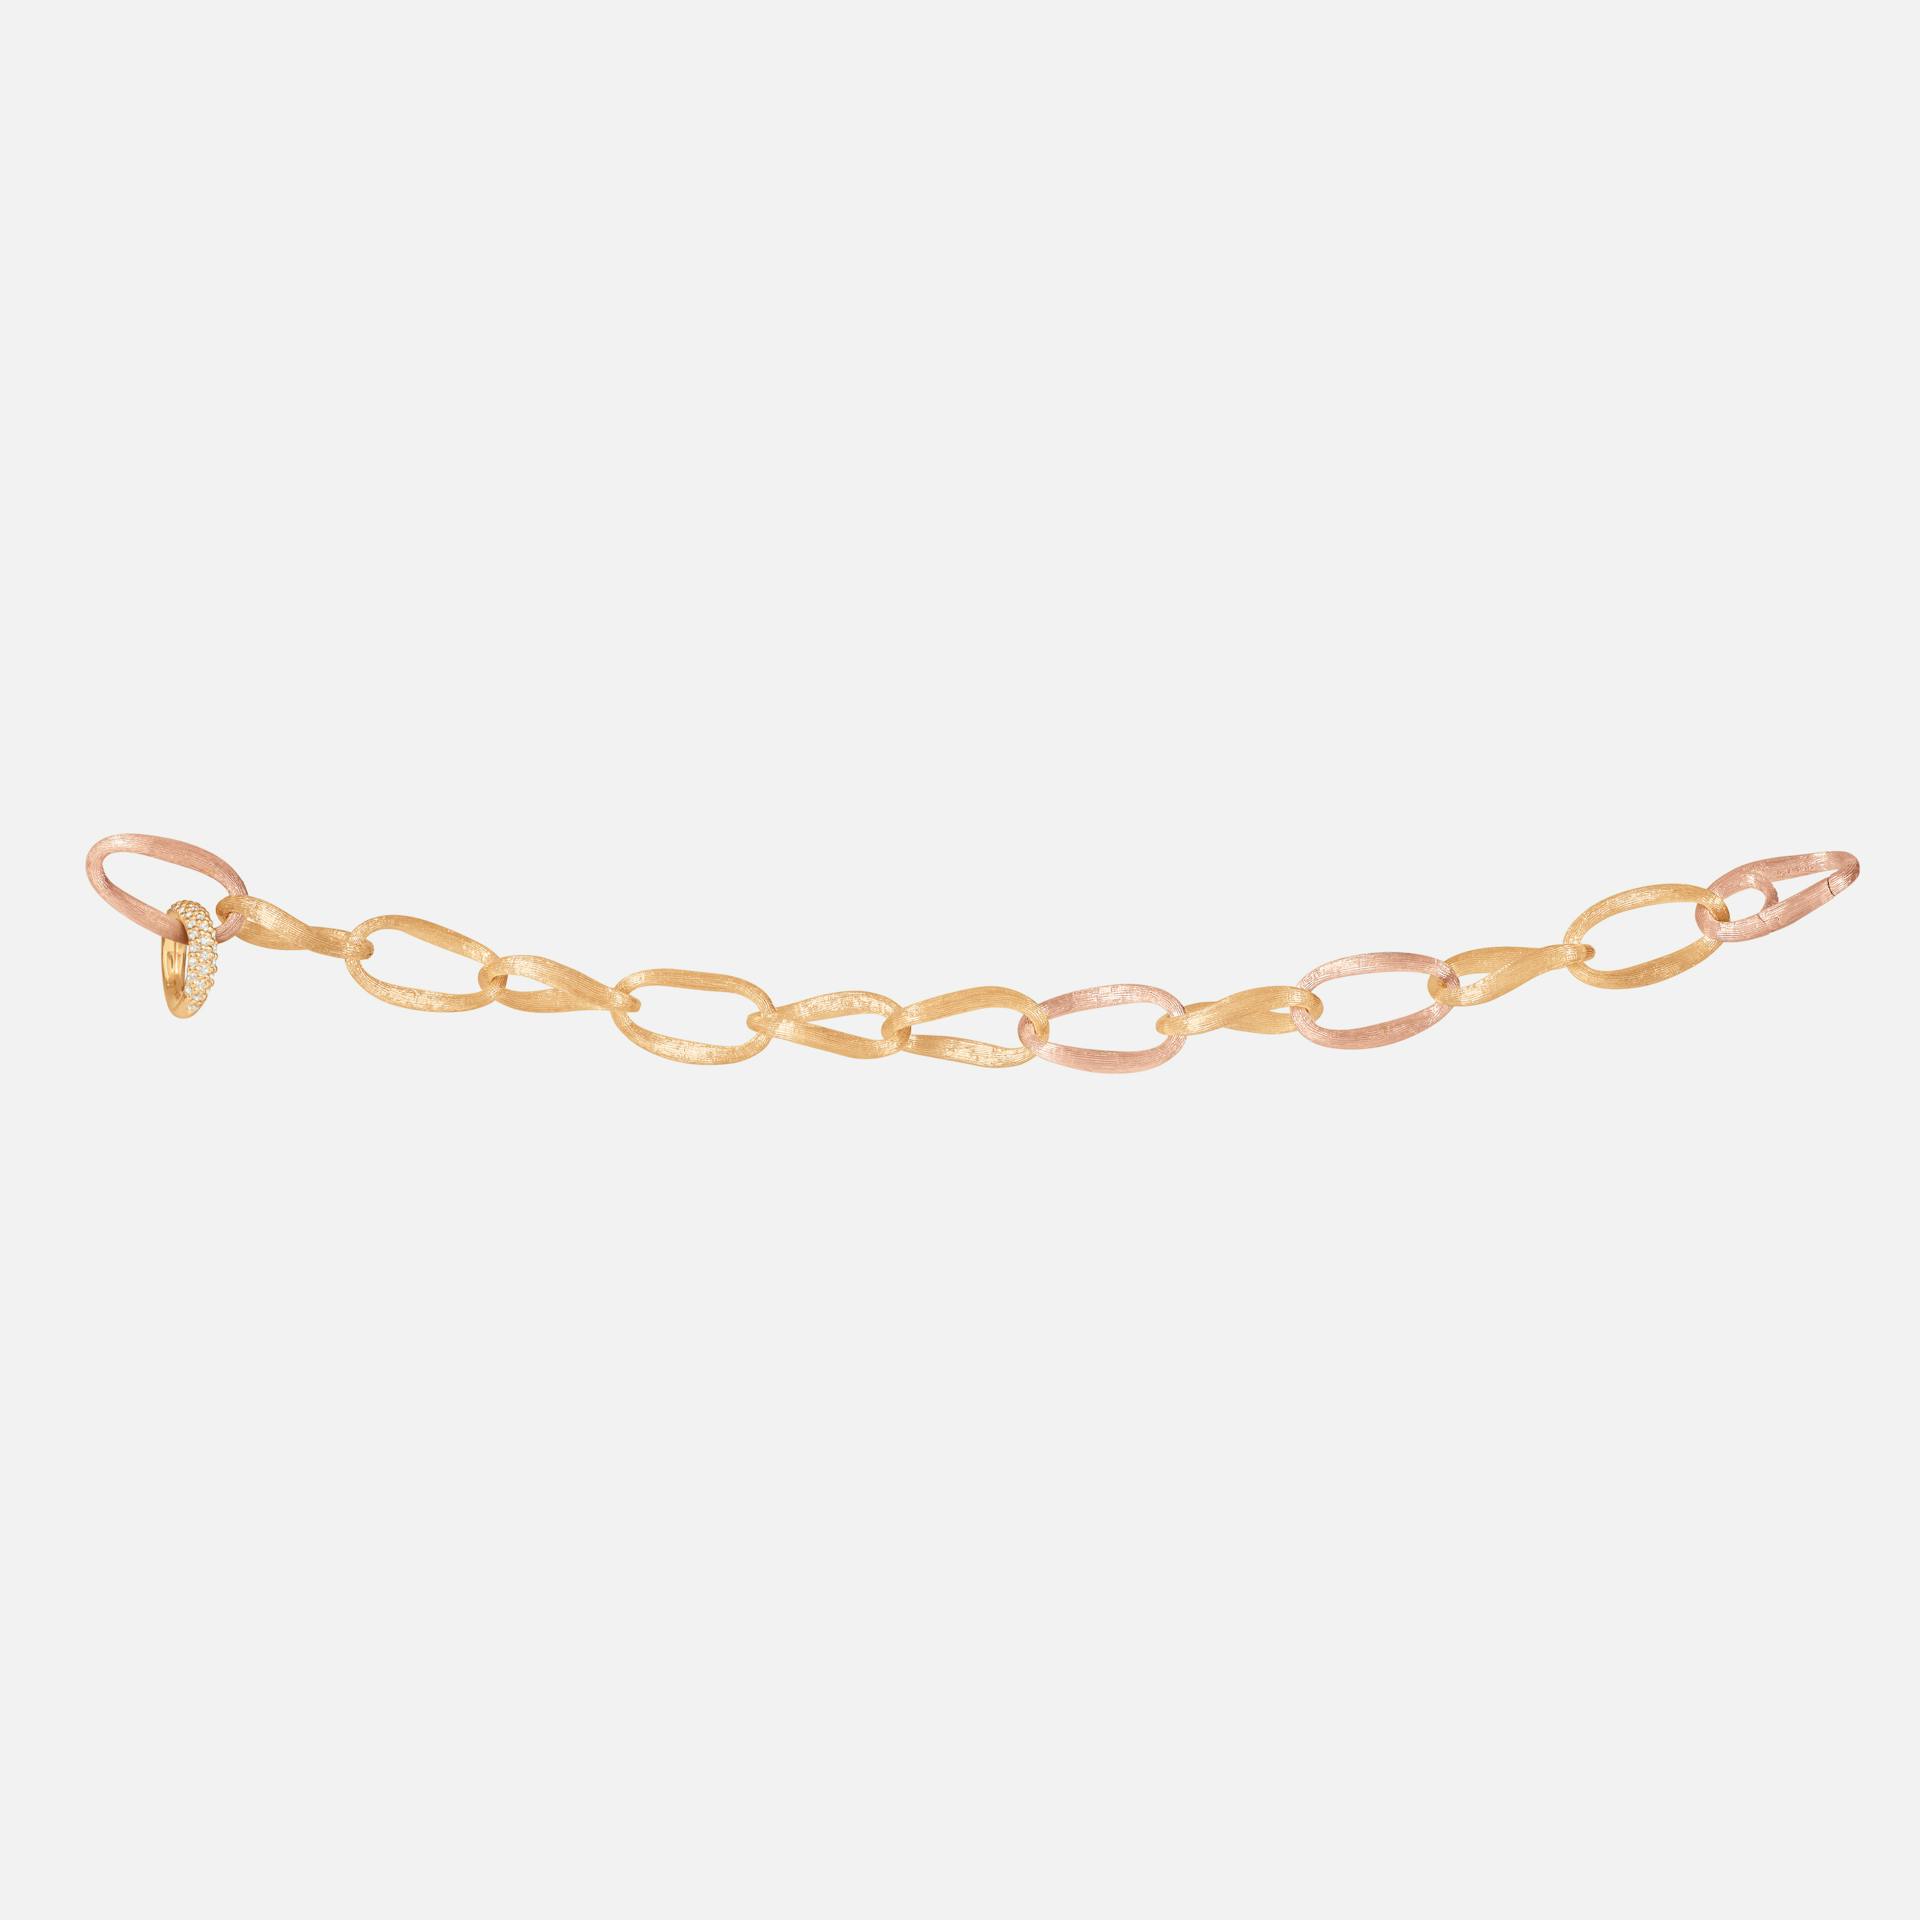 Love bracelet with charm Bracelet Love YG satinized w.charm (18cm) 18k gold and rose gold